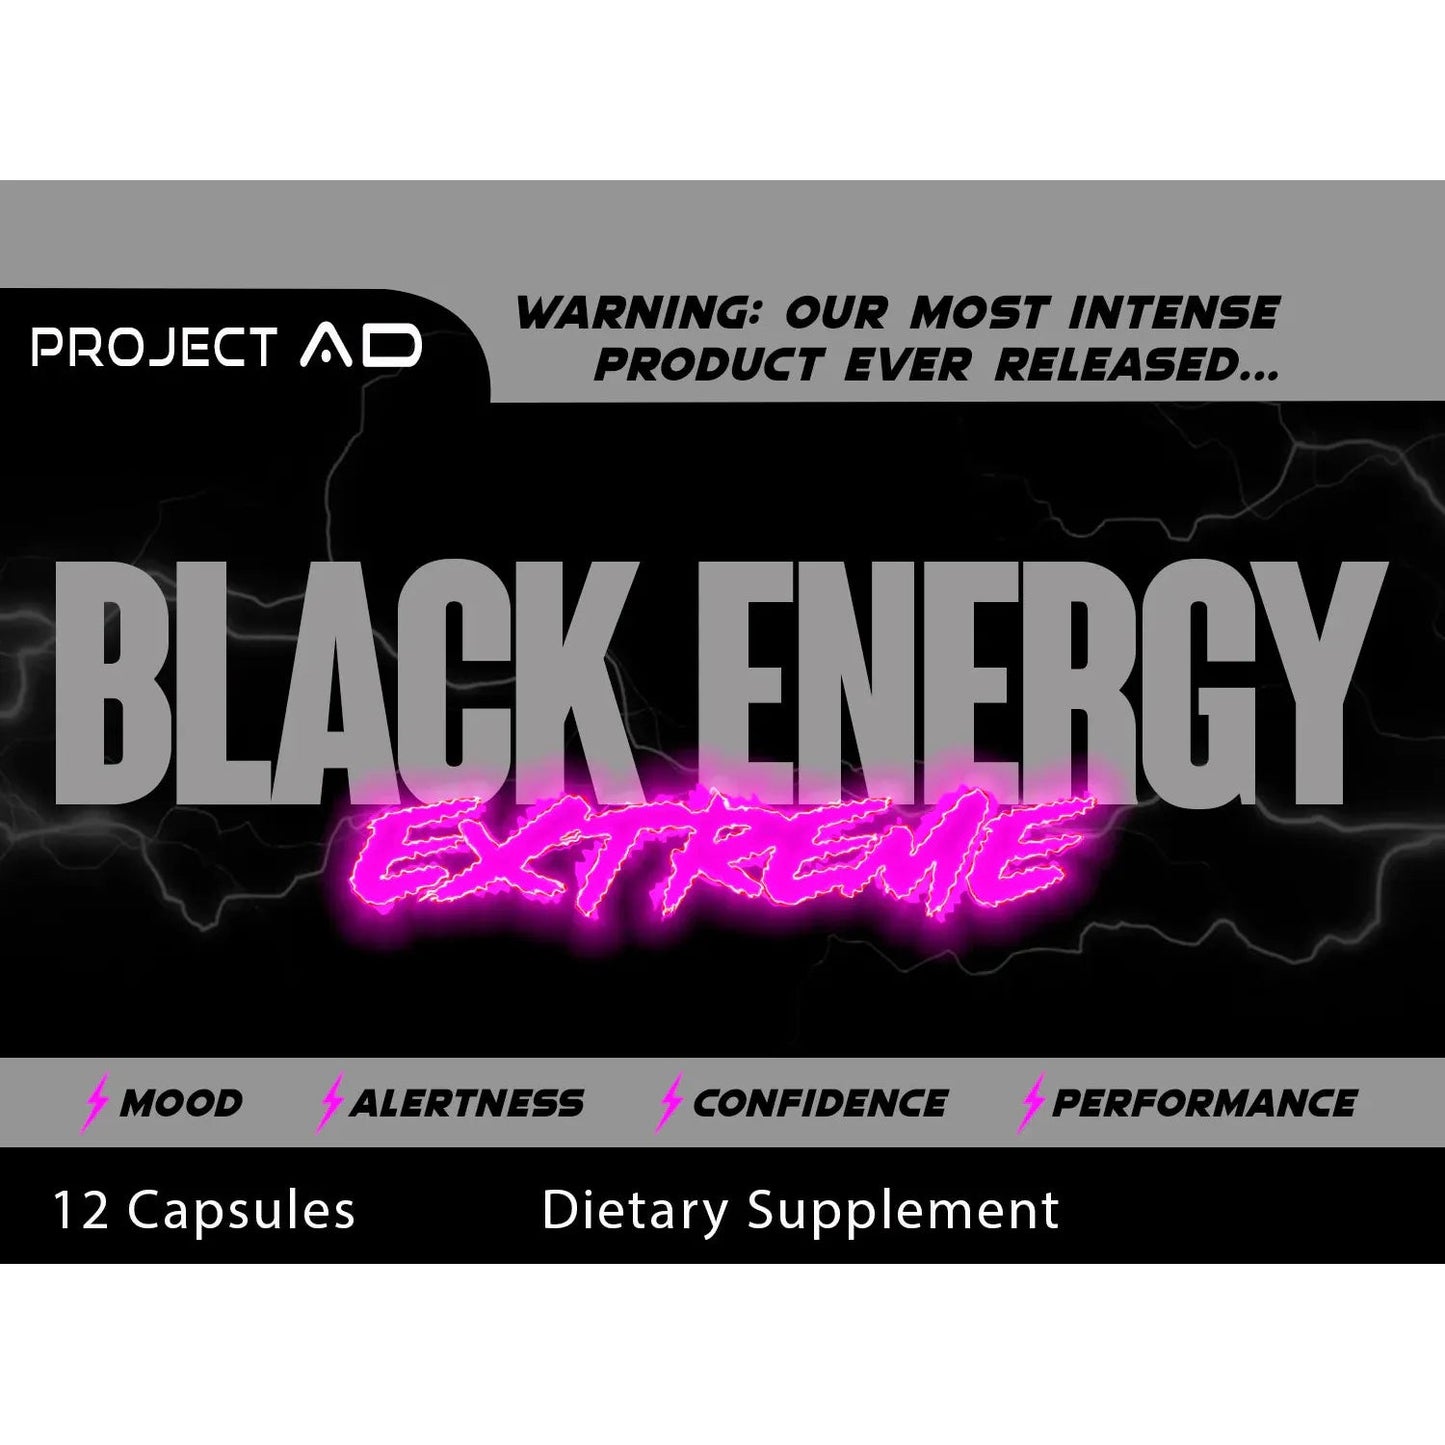 Black Energy Extreme Max Muscle Orlando